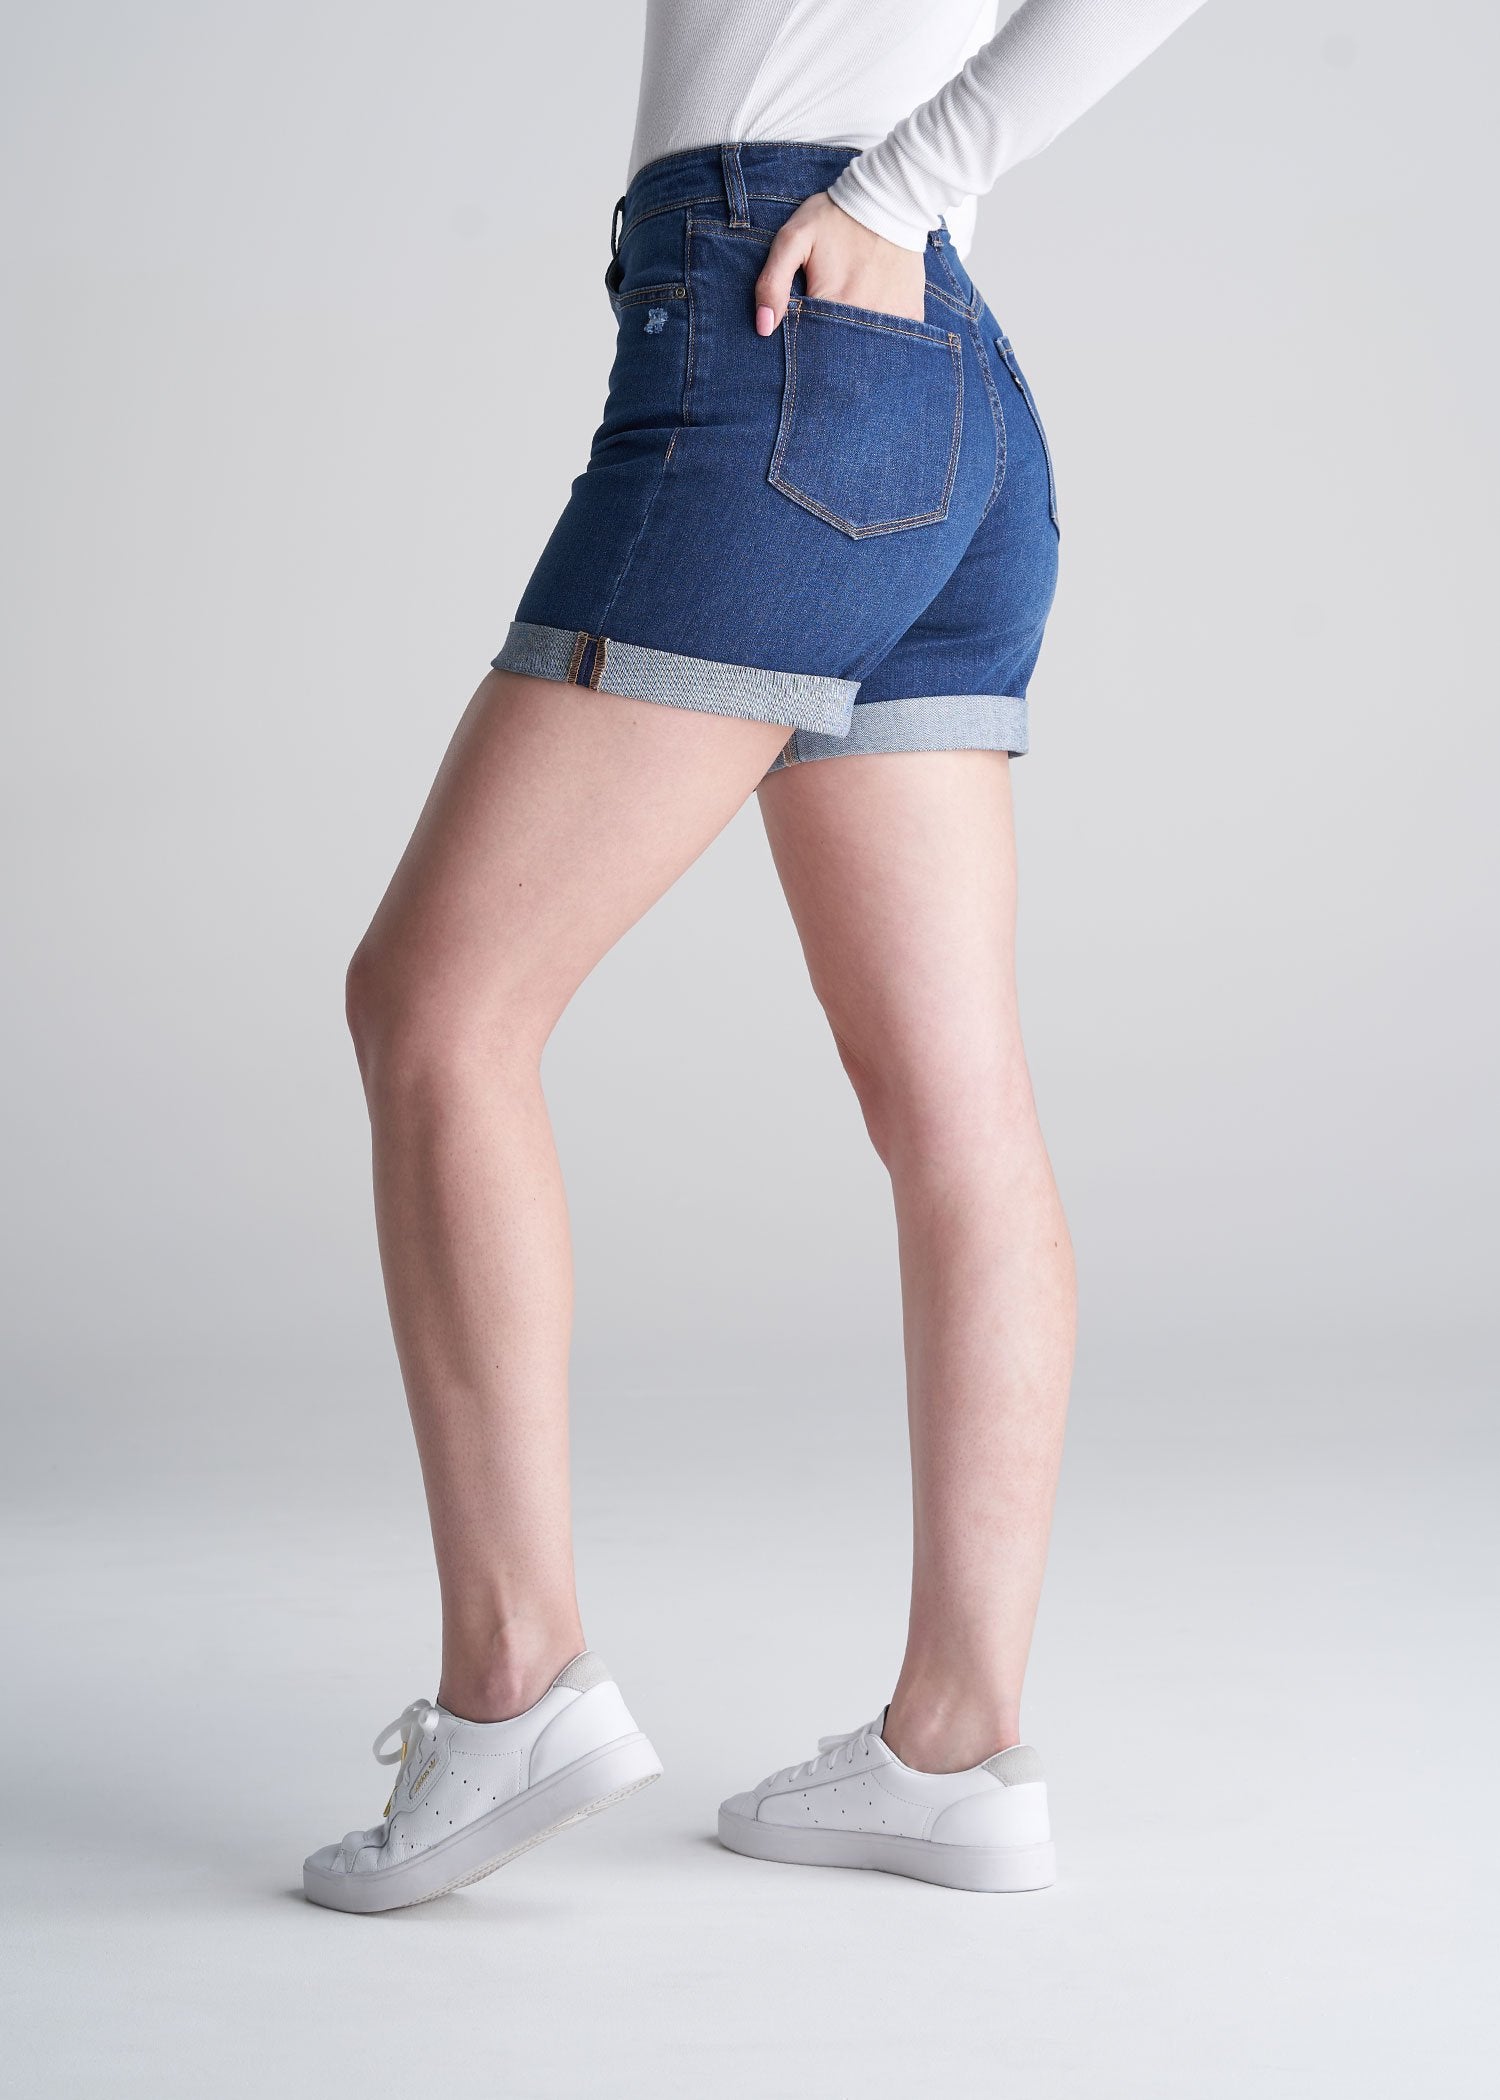 American_Tall_Womens_denim_shorts_medium_blue-side